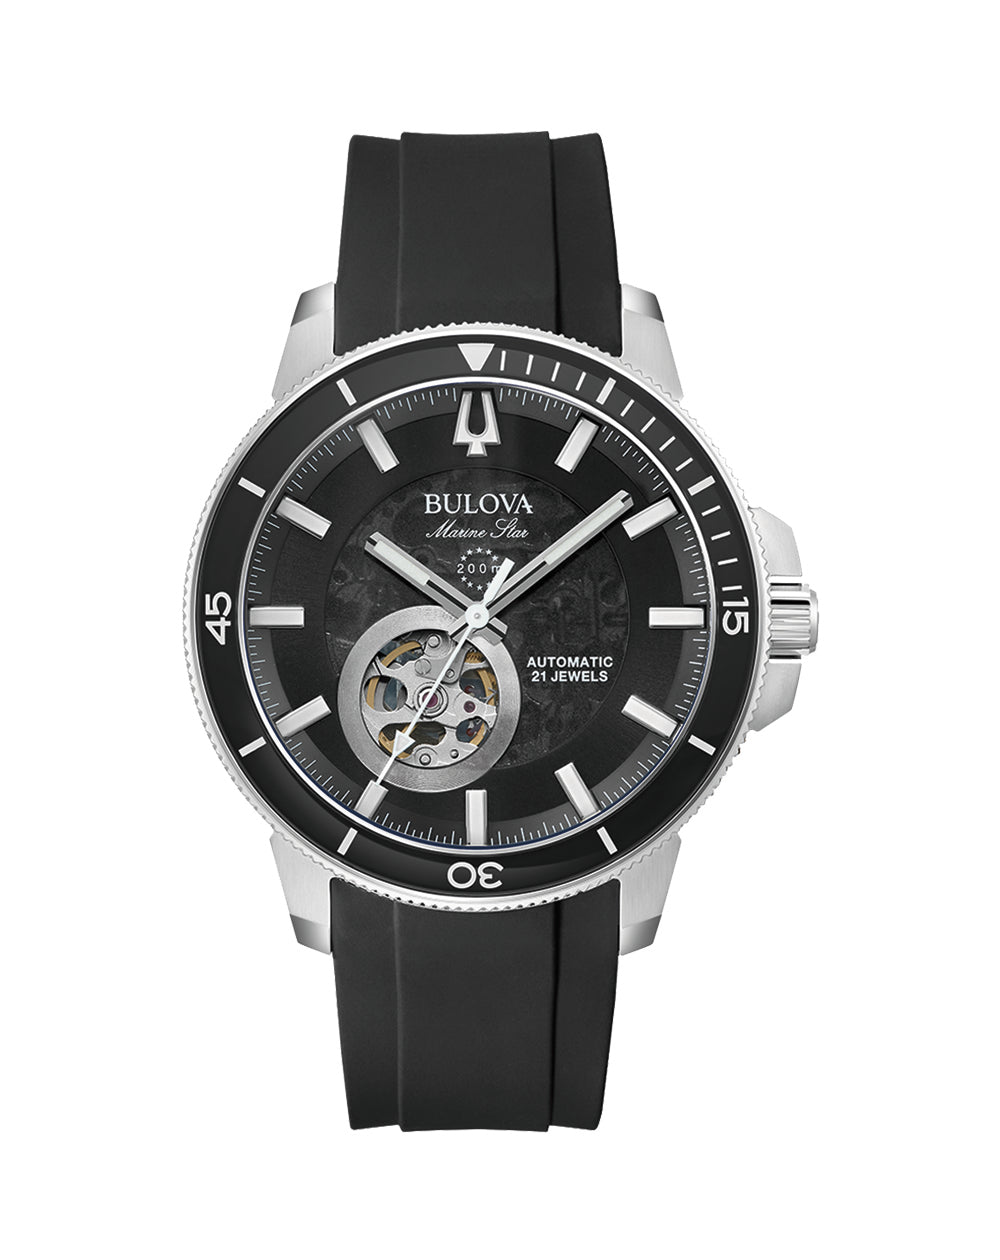 98A226 Bulova Men's Marine Star Automatic Watch